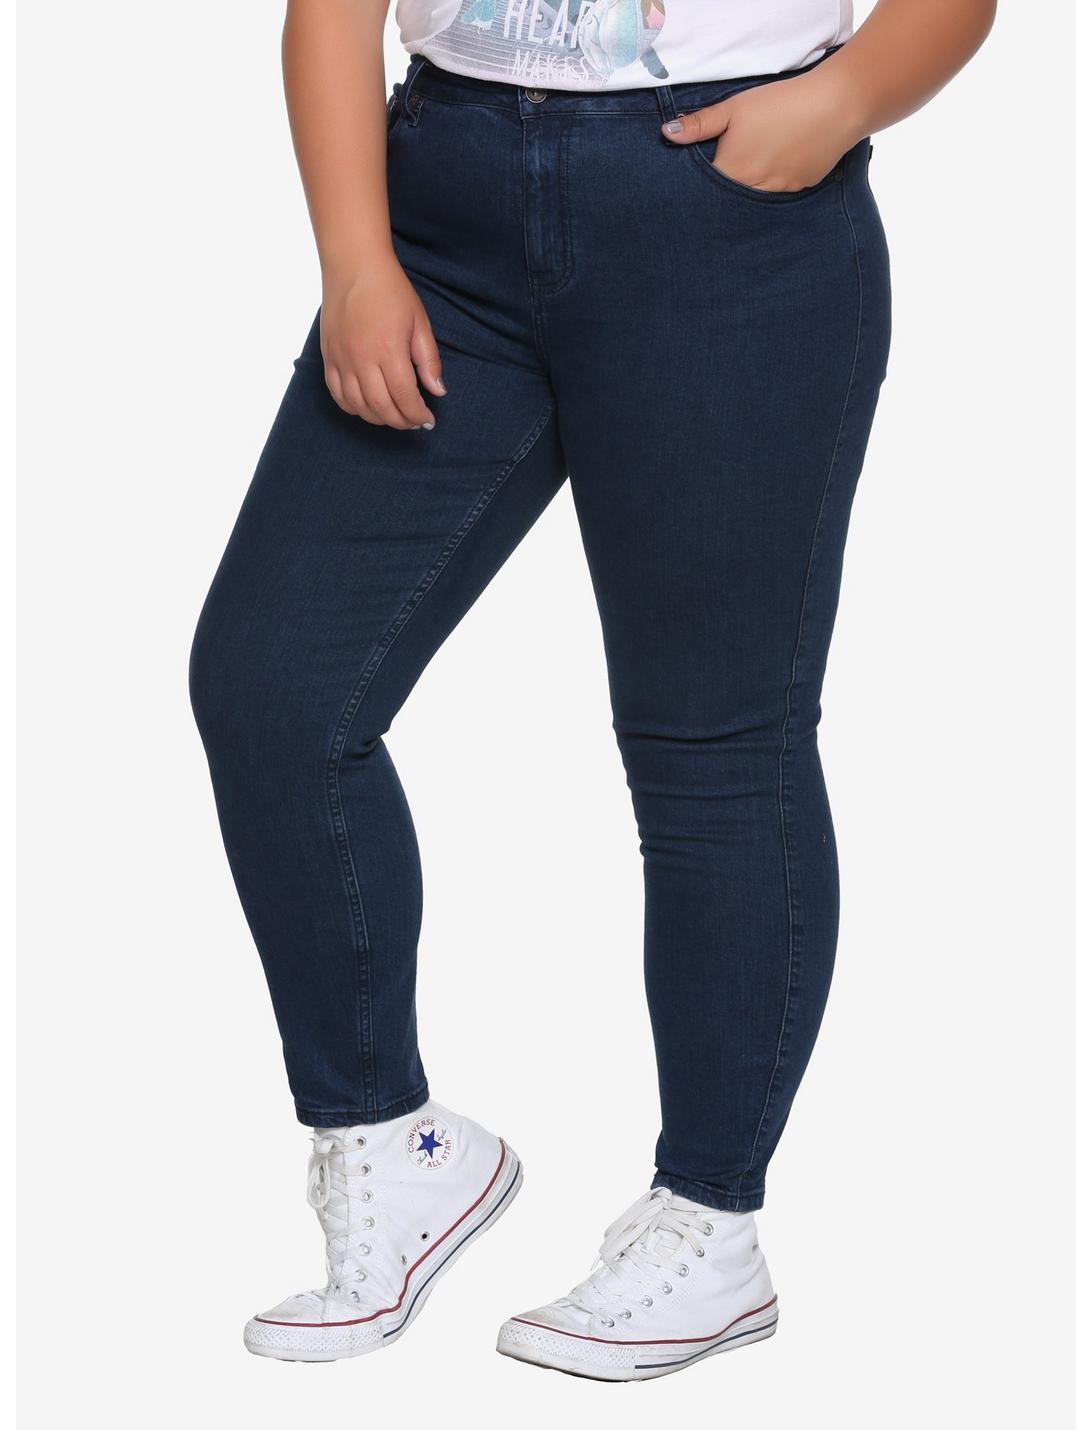 Blackheart Indigo Skinny Jeans Plus Size, BLUE, hi-res